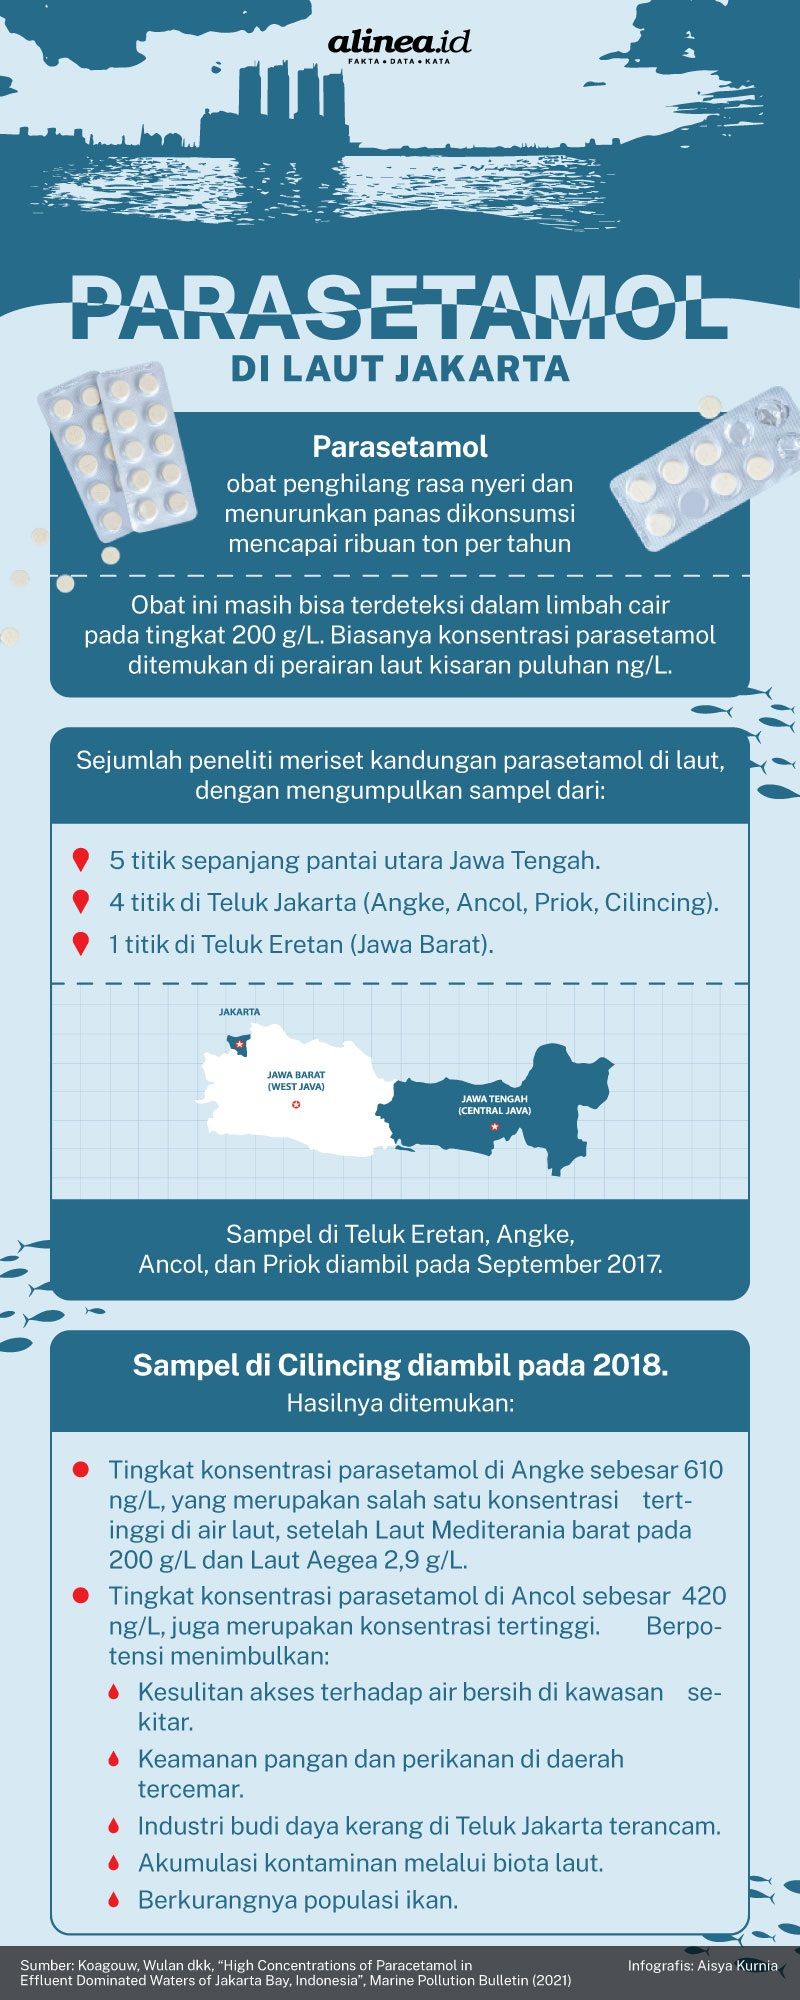 Infografik Alinea.id/Aisya Kurnia.